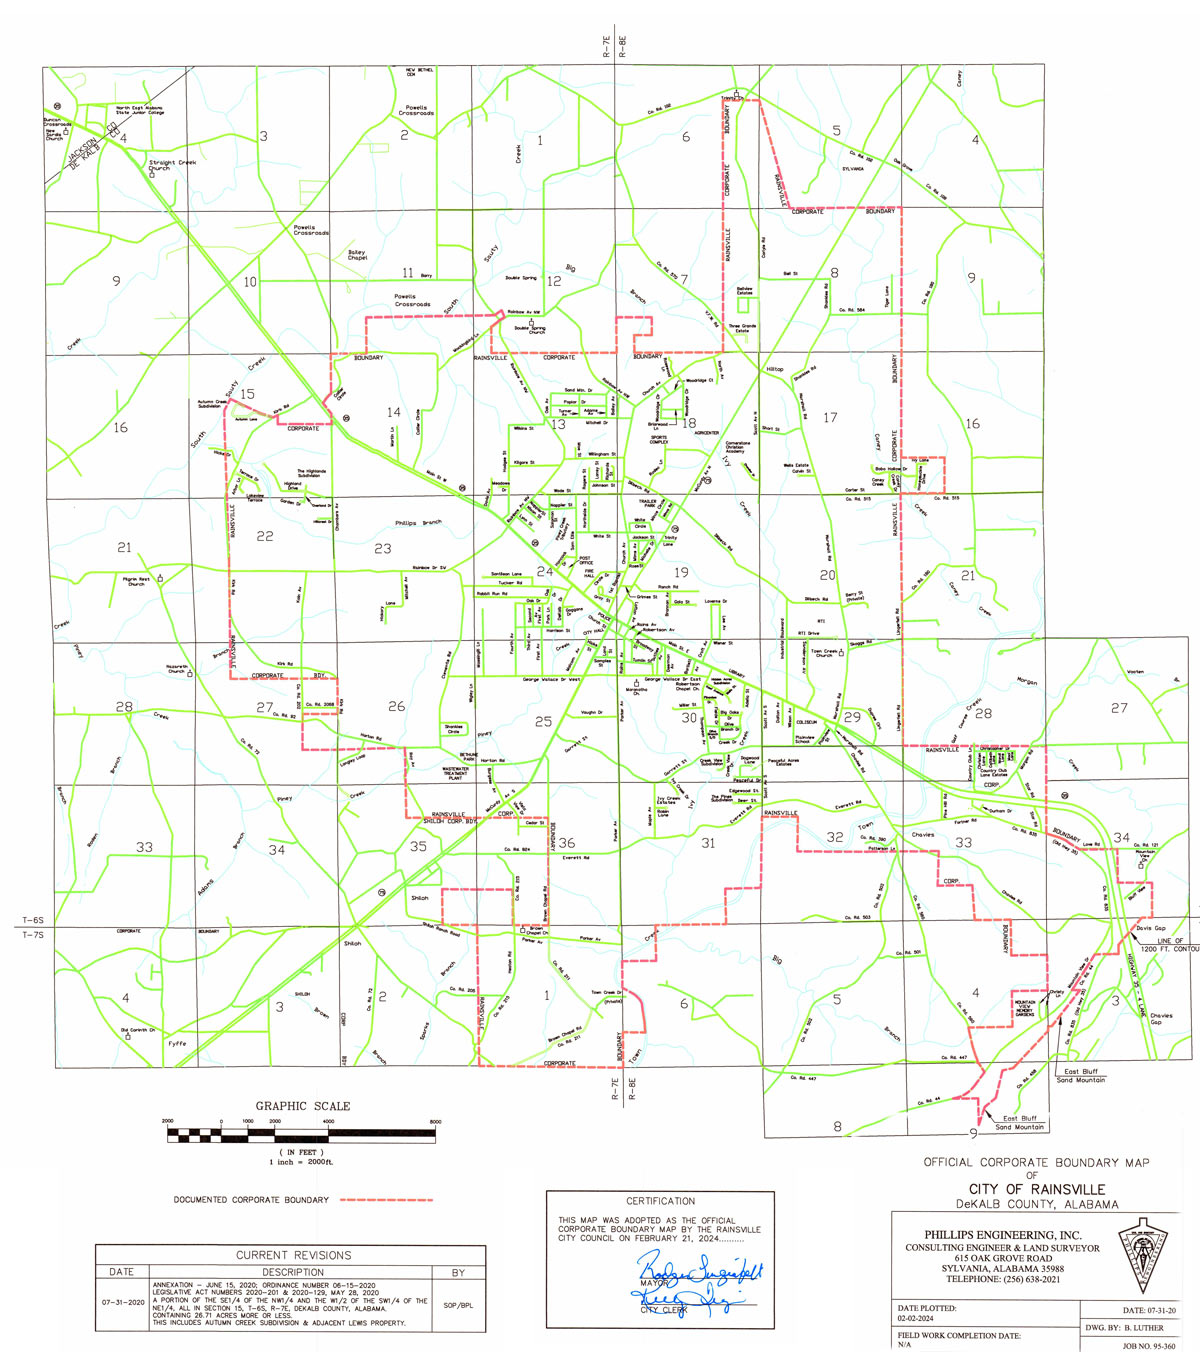 Rainsville Corporate Boundary Map